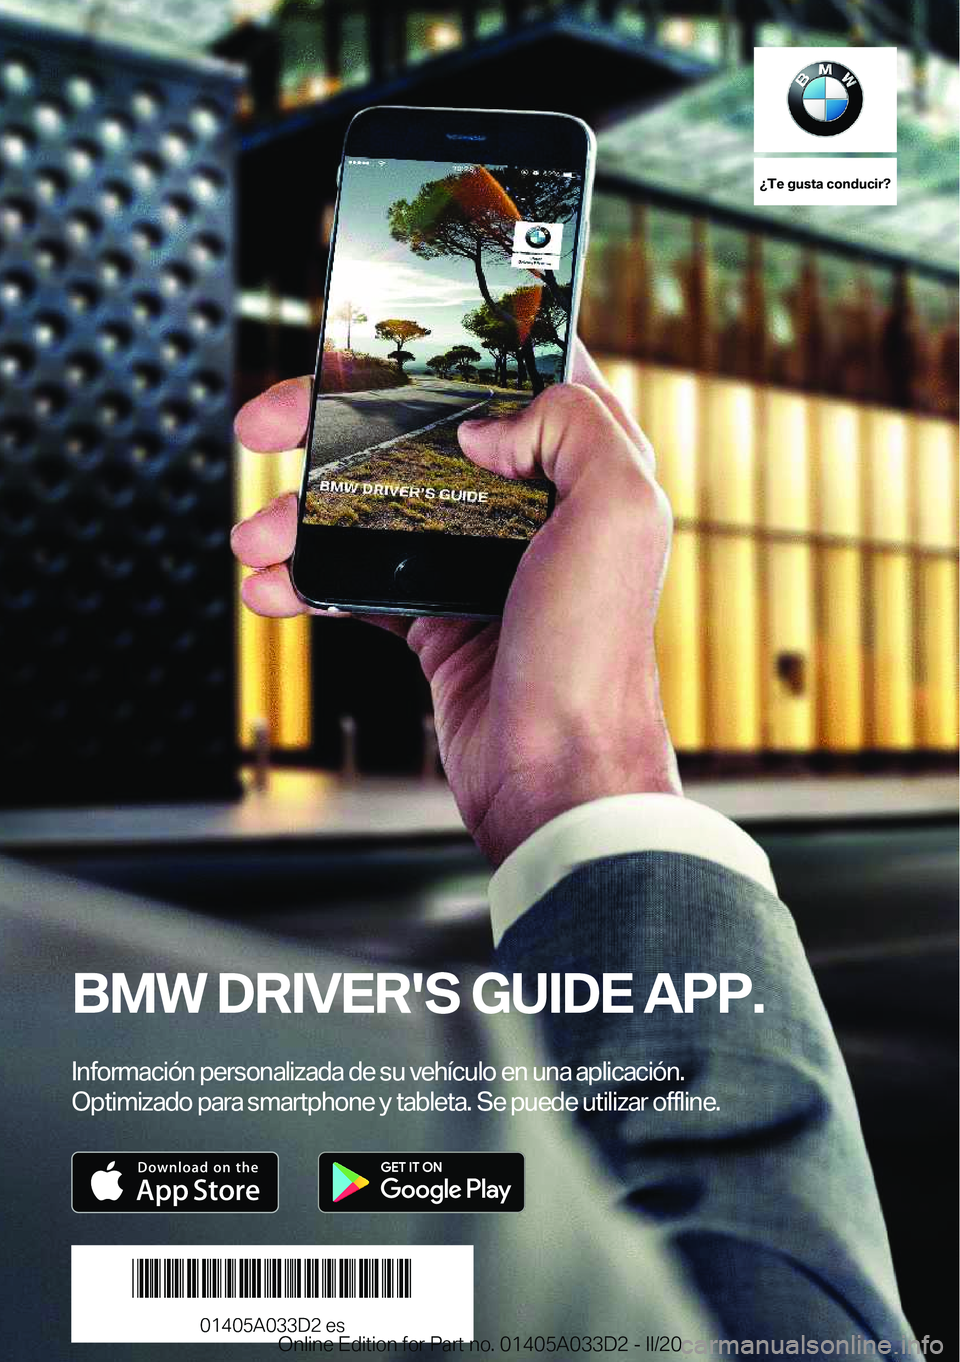 BMW X5 M 2020  Manuales de Empleo (in Spanish) ��T�e��g�u�s�t�a��c�o�n�d�u�c�i�r� 
�B�M�W��D�R�I�V�E�R�'�S��G�U�I�D�E��A�P�P�.�*�n�f�o�r�m�a�c�i�